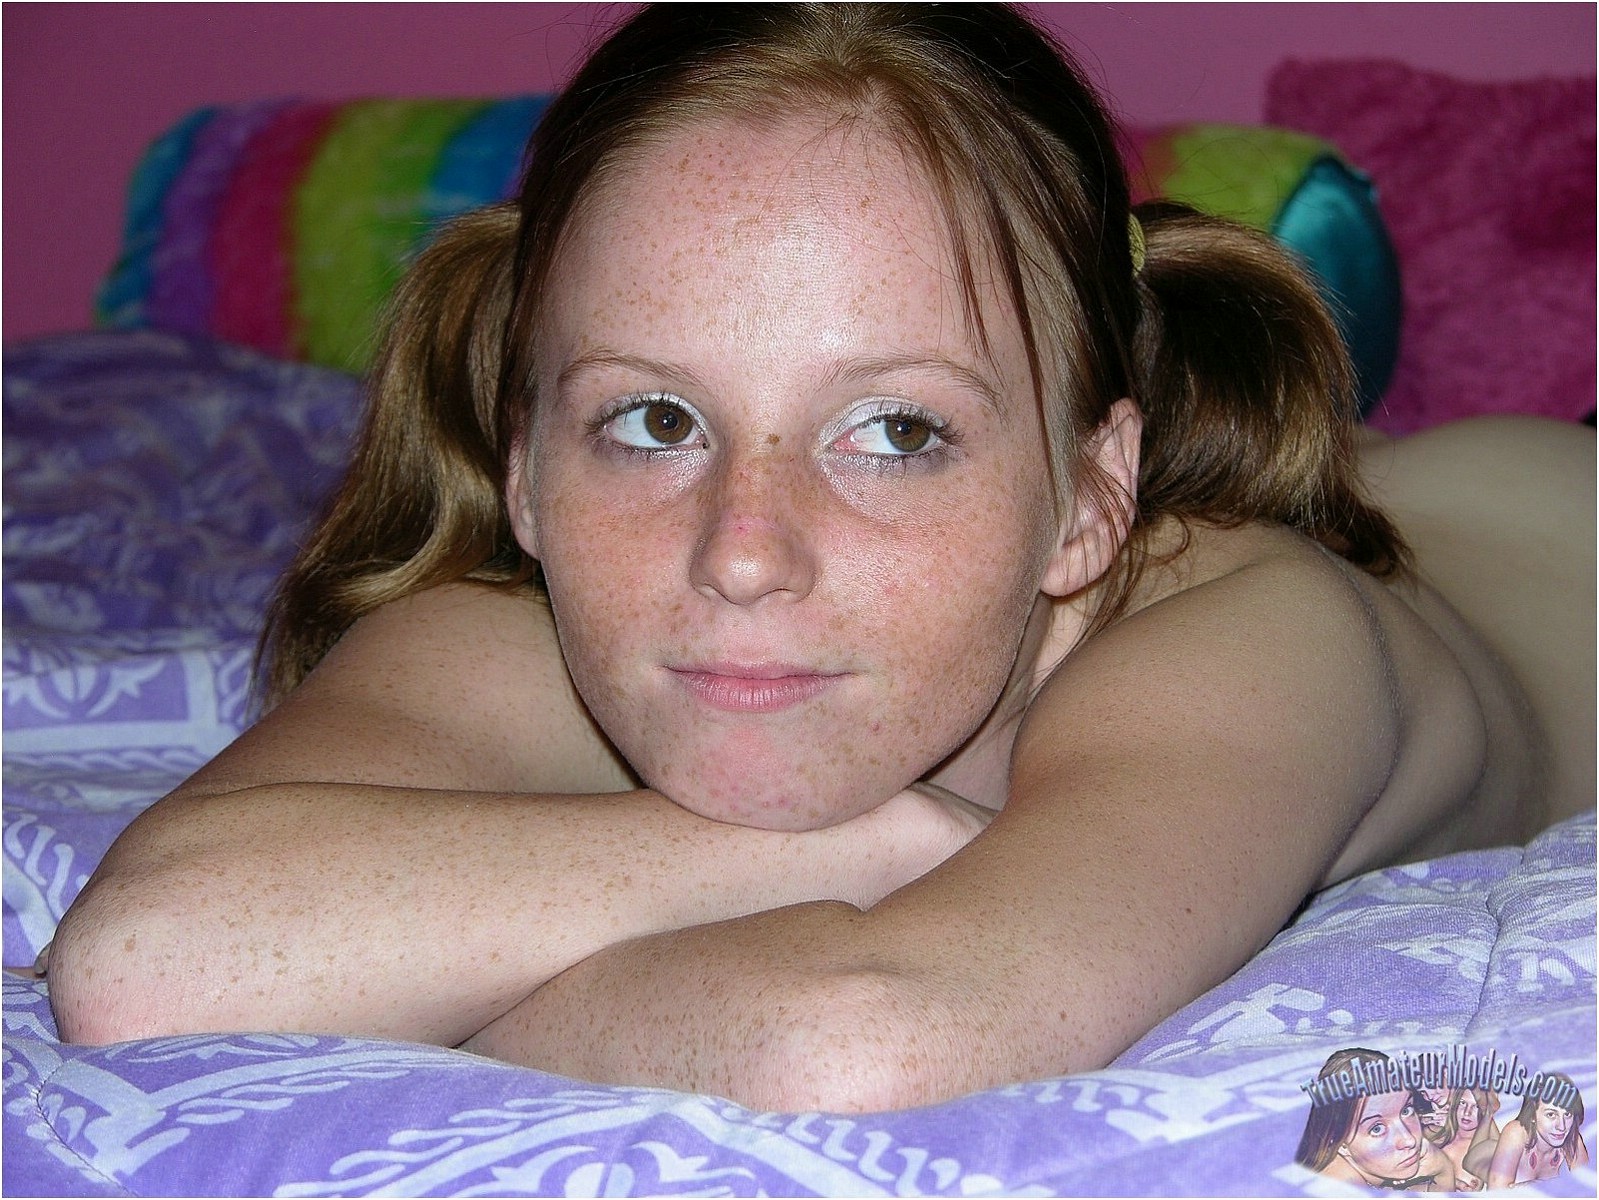 Redhead teen pussy click here - XXX photo